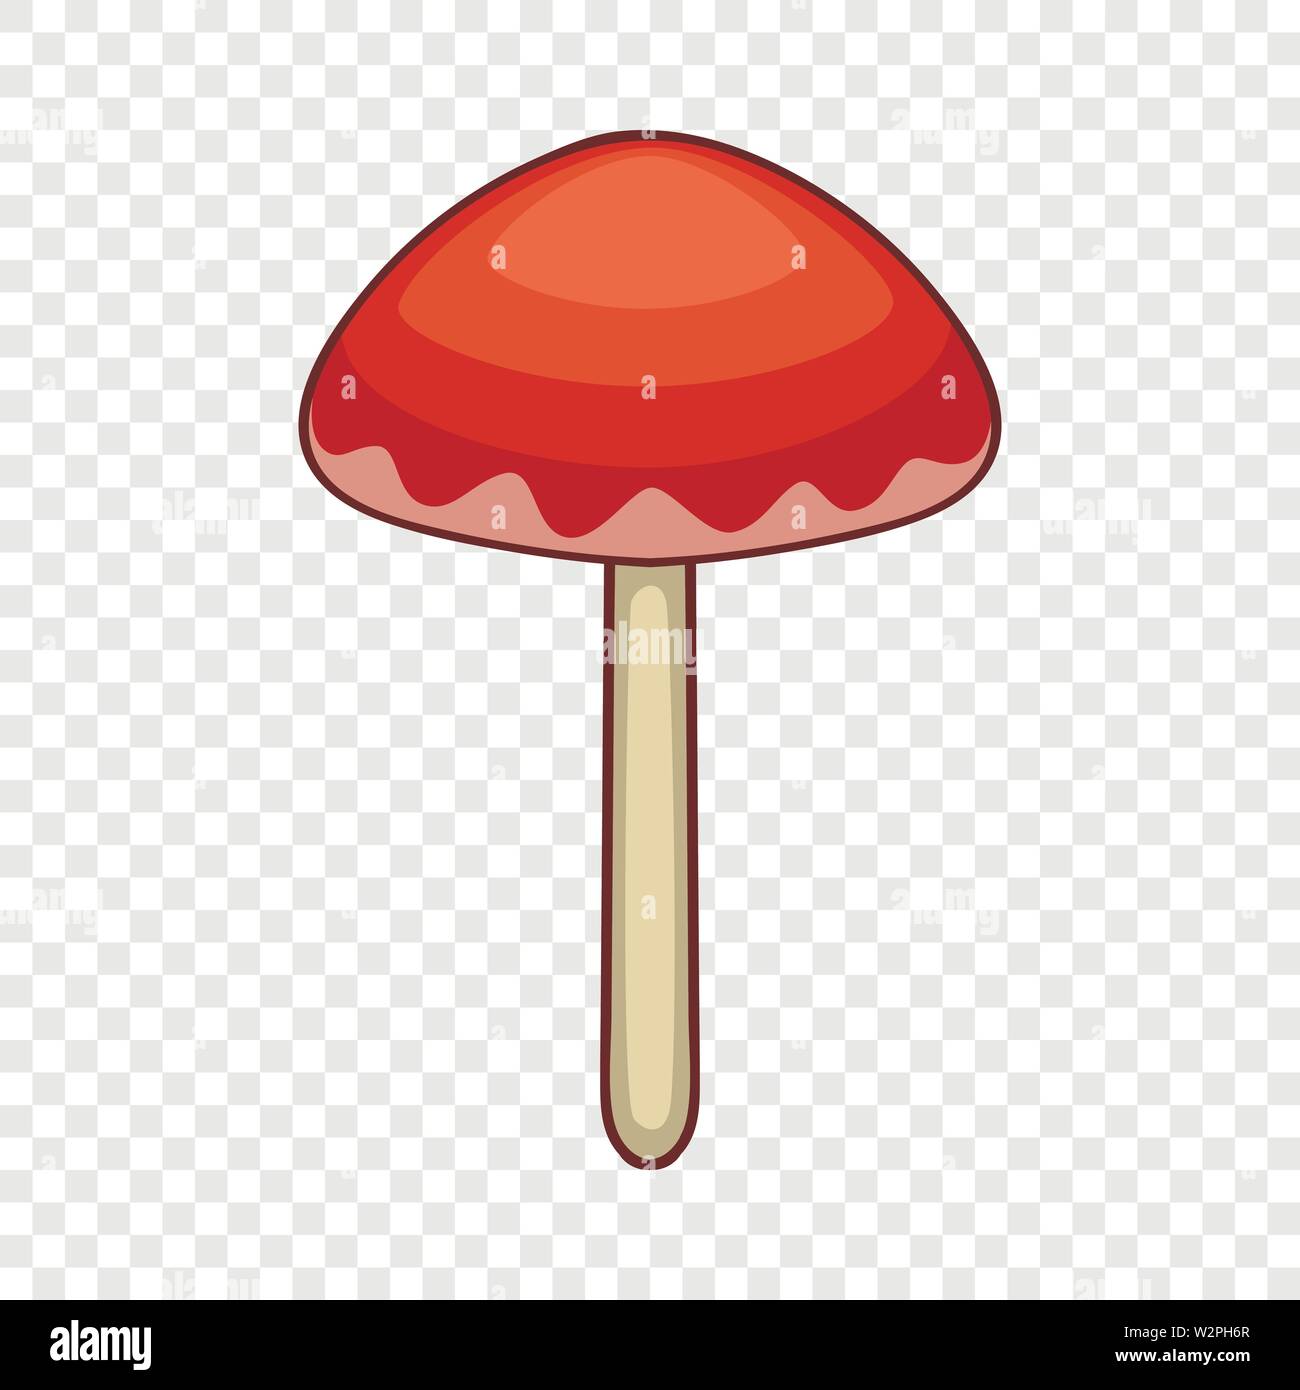 Suillus mushroom icon, cartoon style Stock Vector